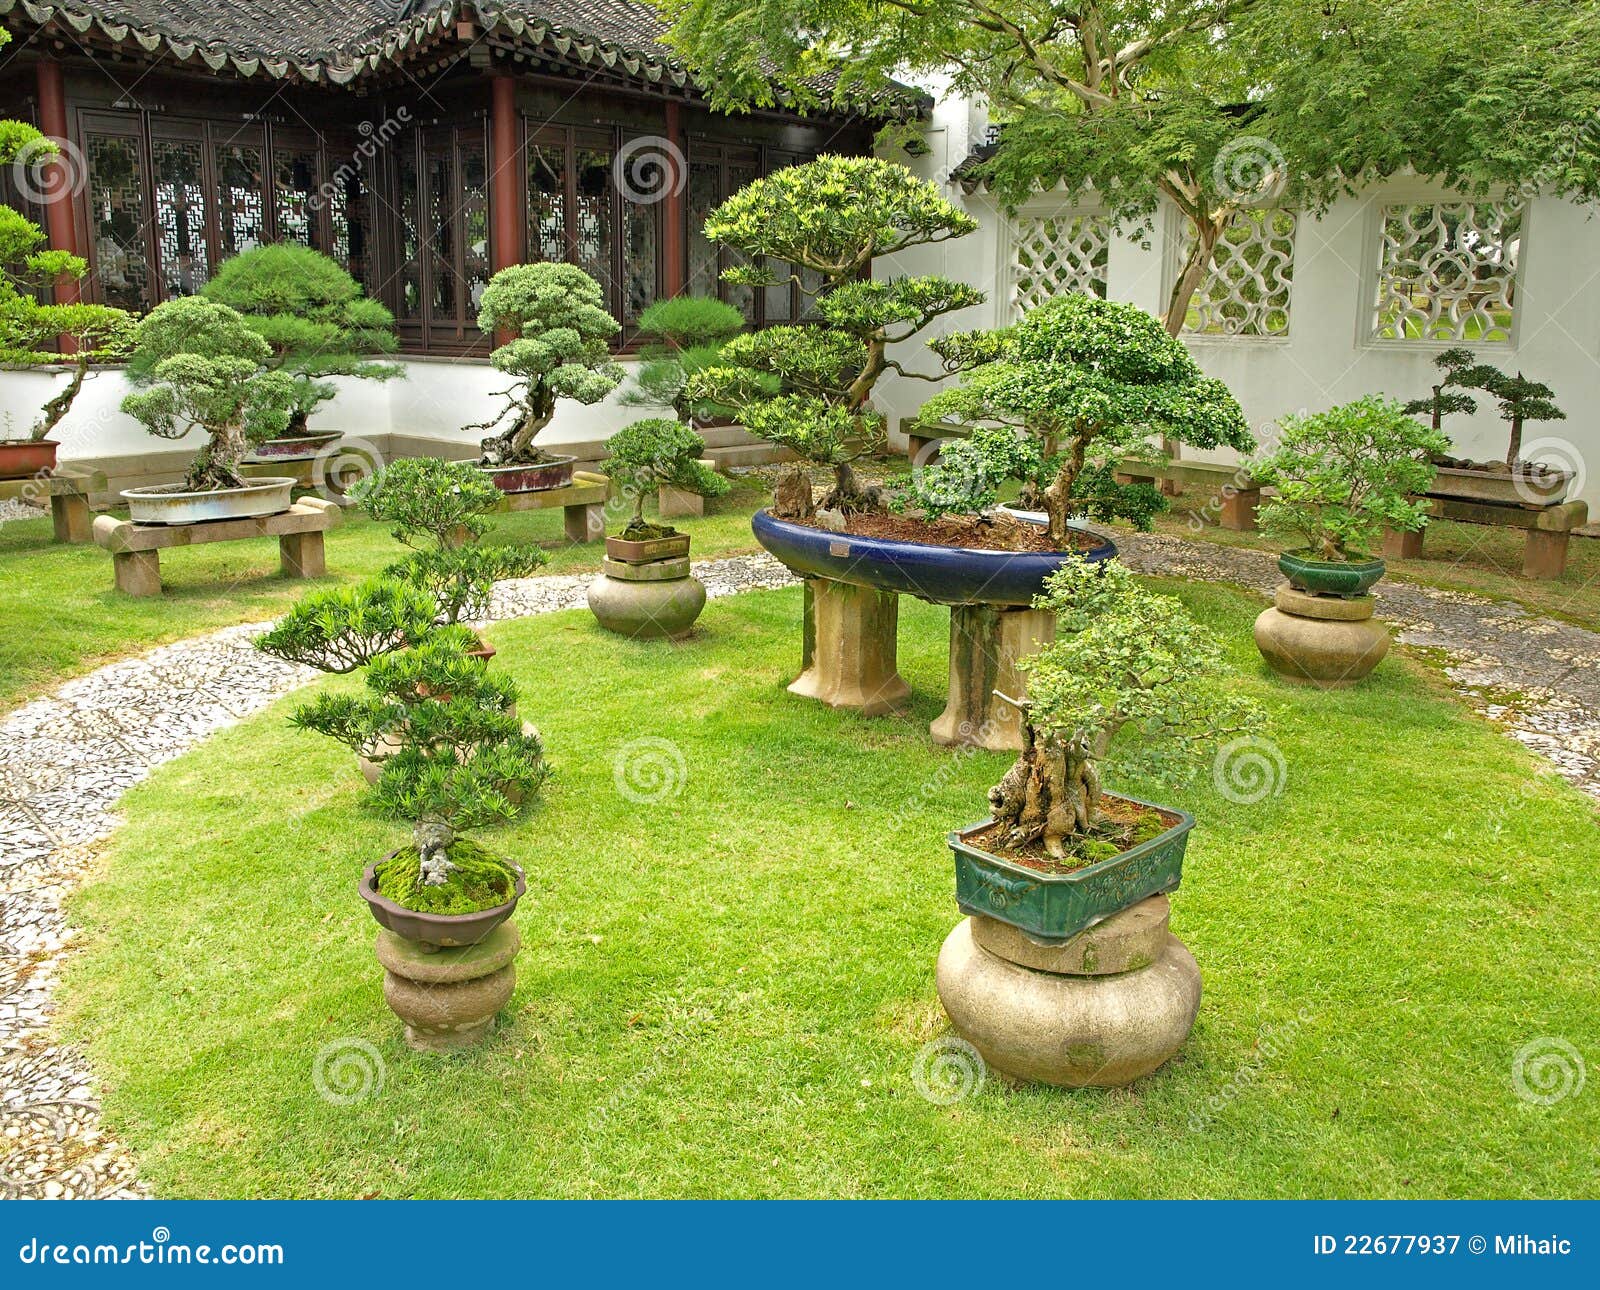 Laboratorio Hueco cáscara Jardín de los bonsais imagen de archivo. Imagen de singapur - 22677937